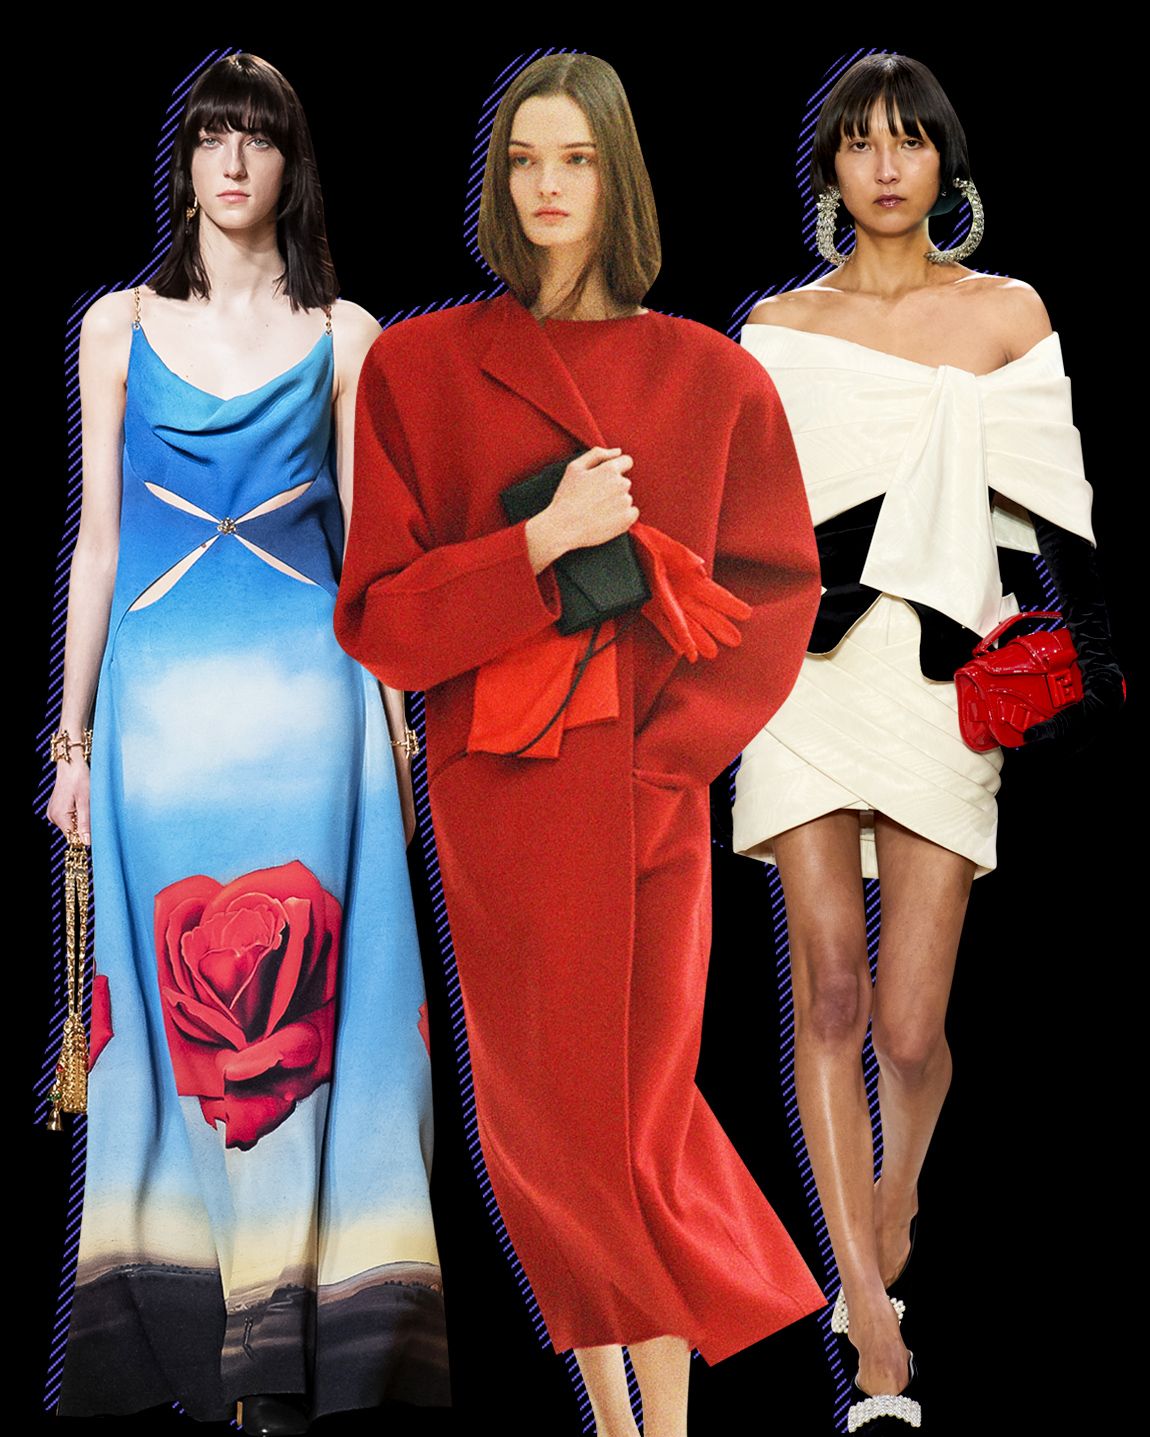 Retro Futur Cap by Saint Laurent in Red color for Luxury Clothing